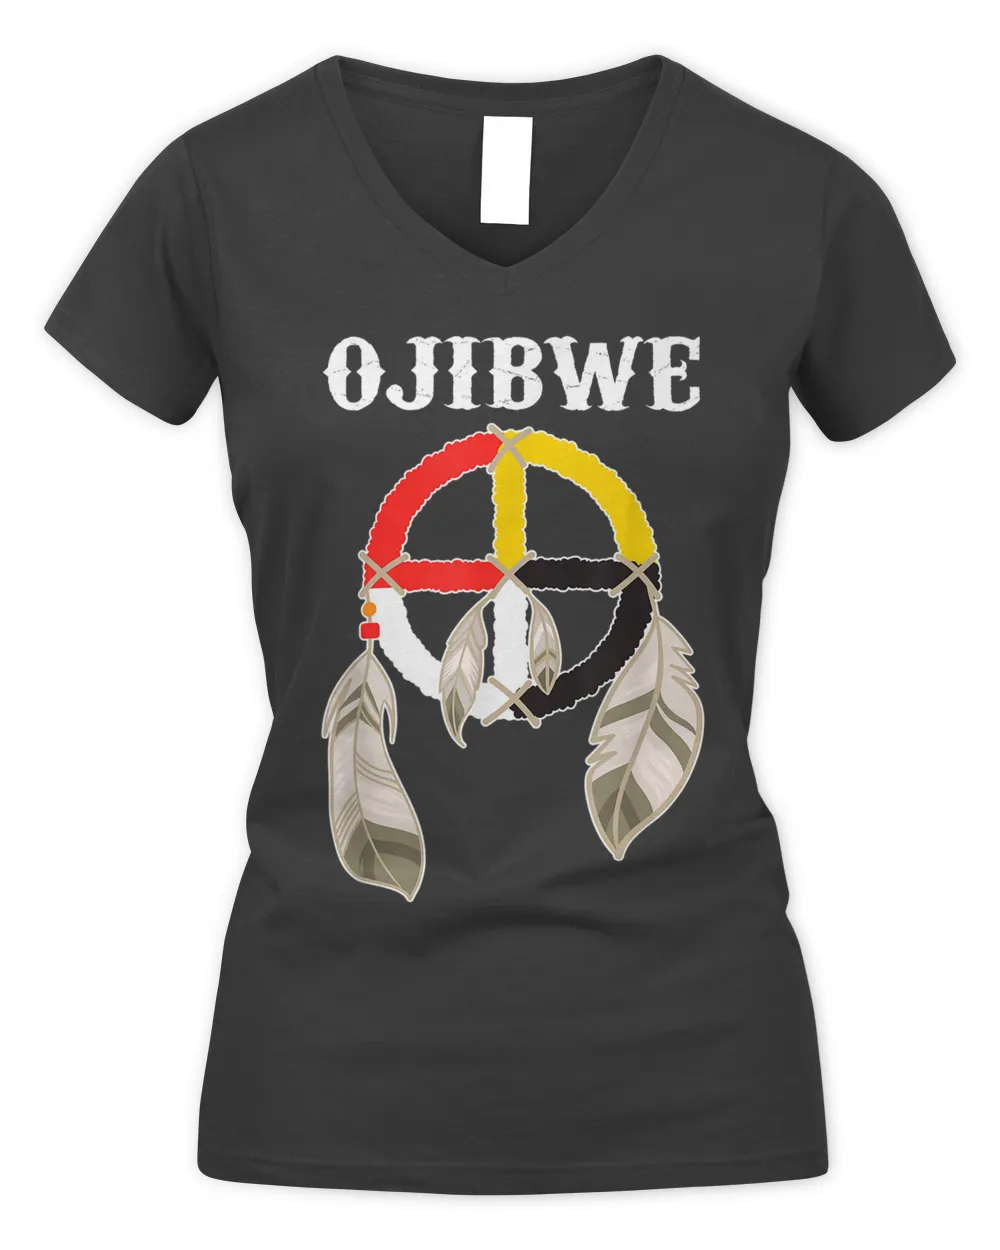 Ojibwe Anishinaabeg People Native American